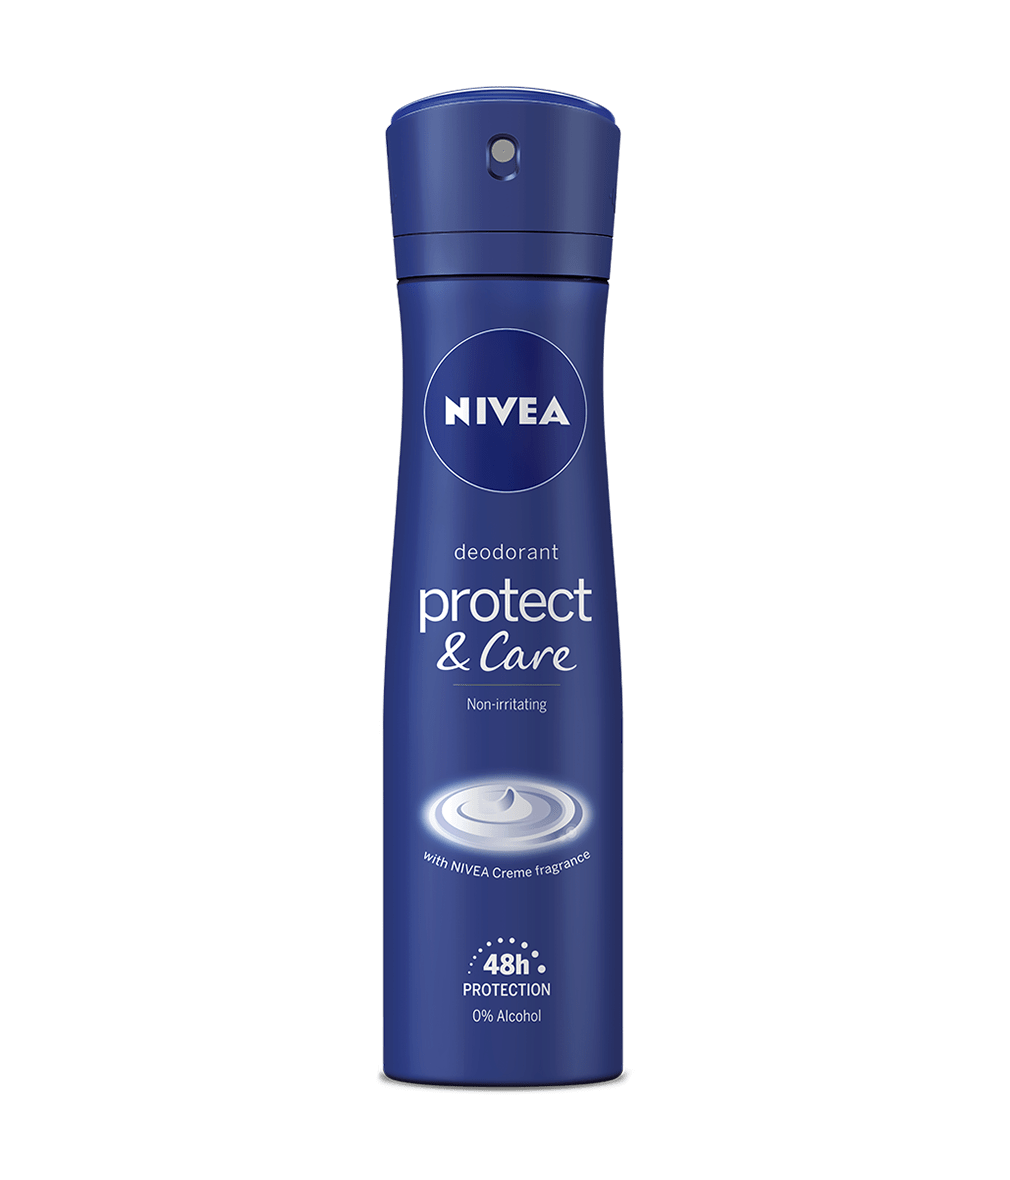 binden stok verwarring Protect & Care | Roll On Deodorant For Men - NIVEA